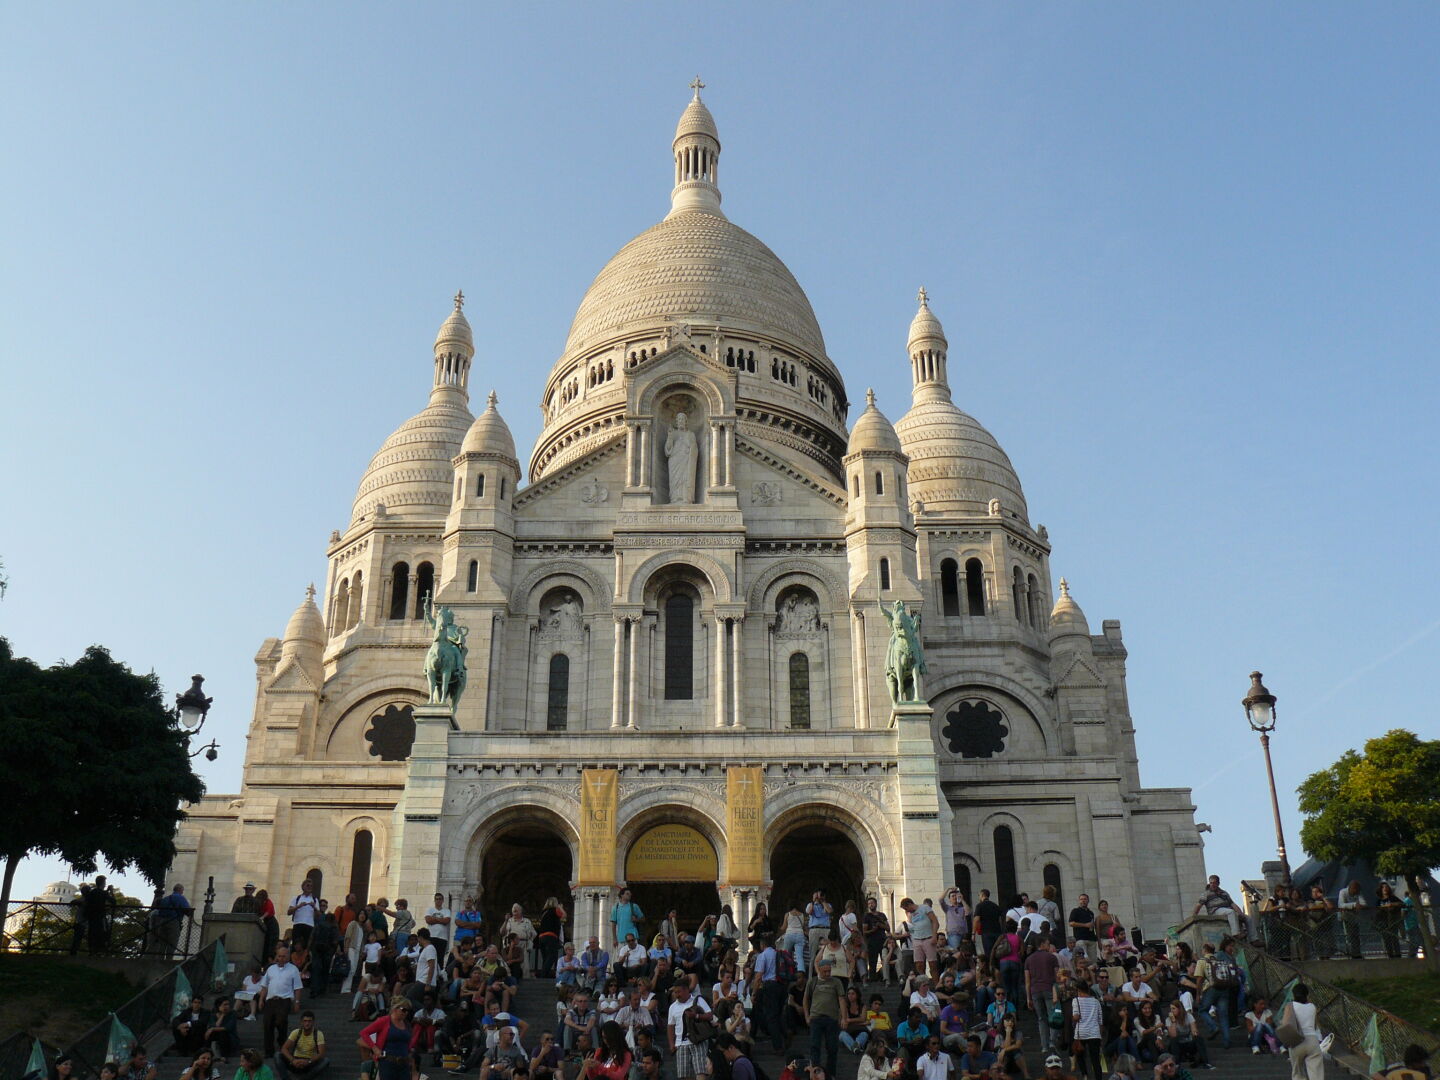 The basilica Sacre Coeur in Montmartre.